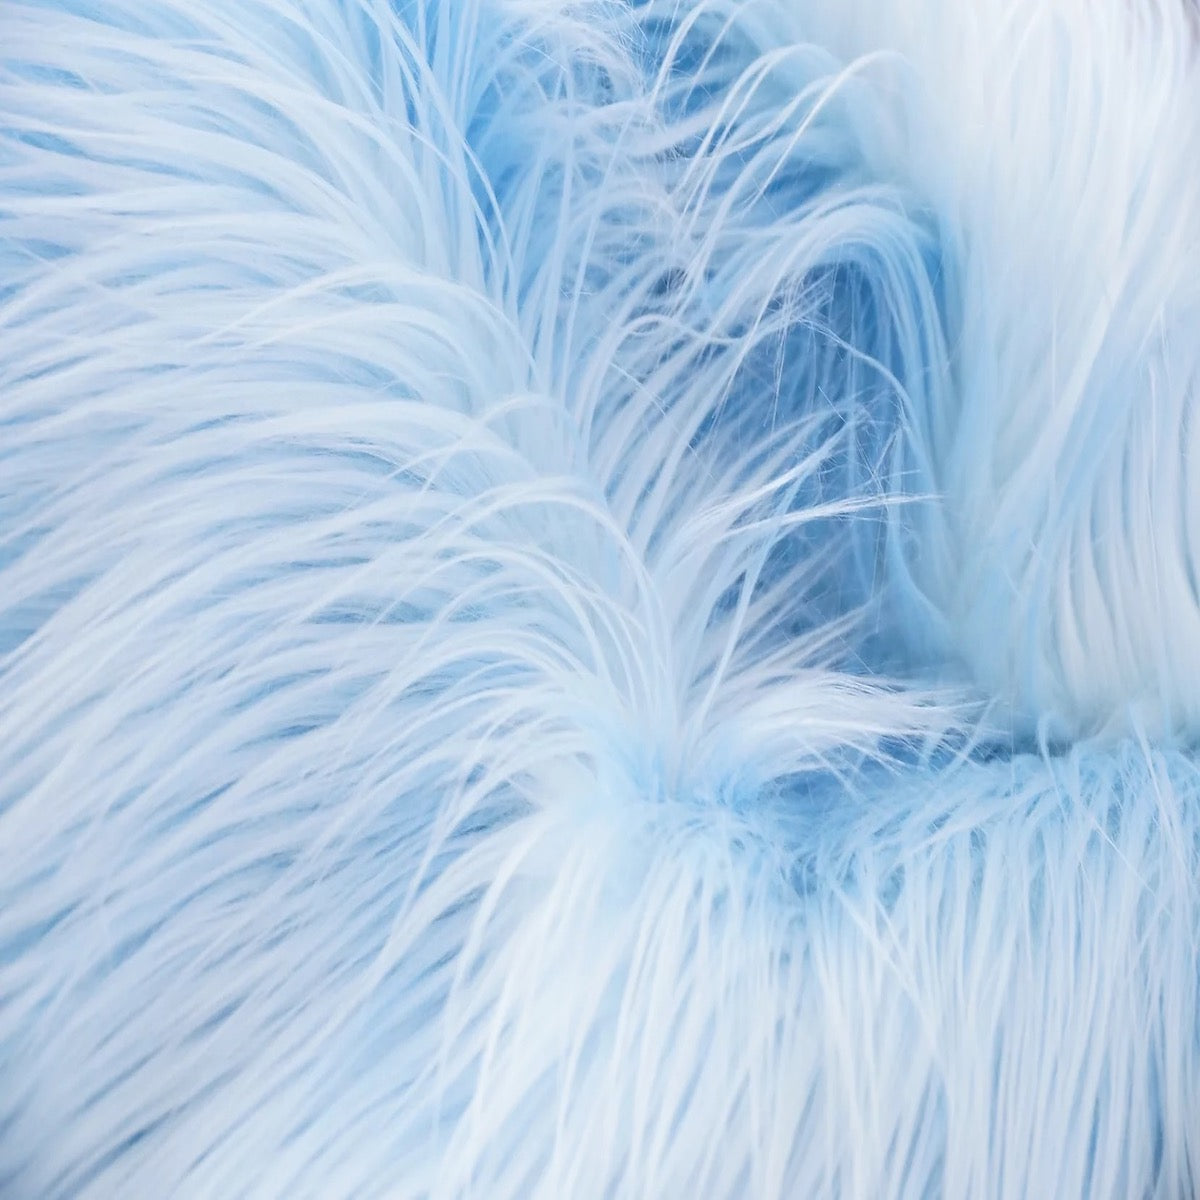 Baby Blue Shaggy Long Pile Faux Fur Fabric (4") - Fashion Fabrics LLC